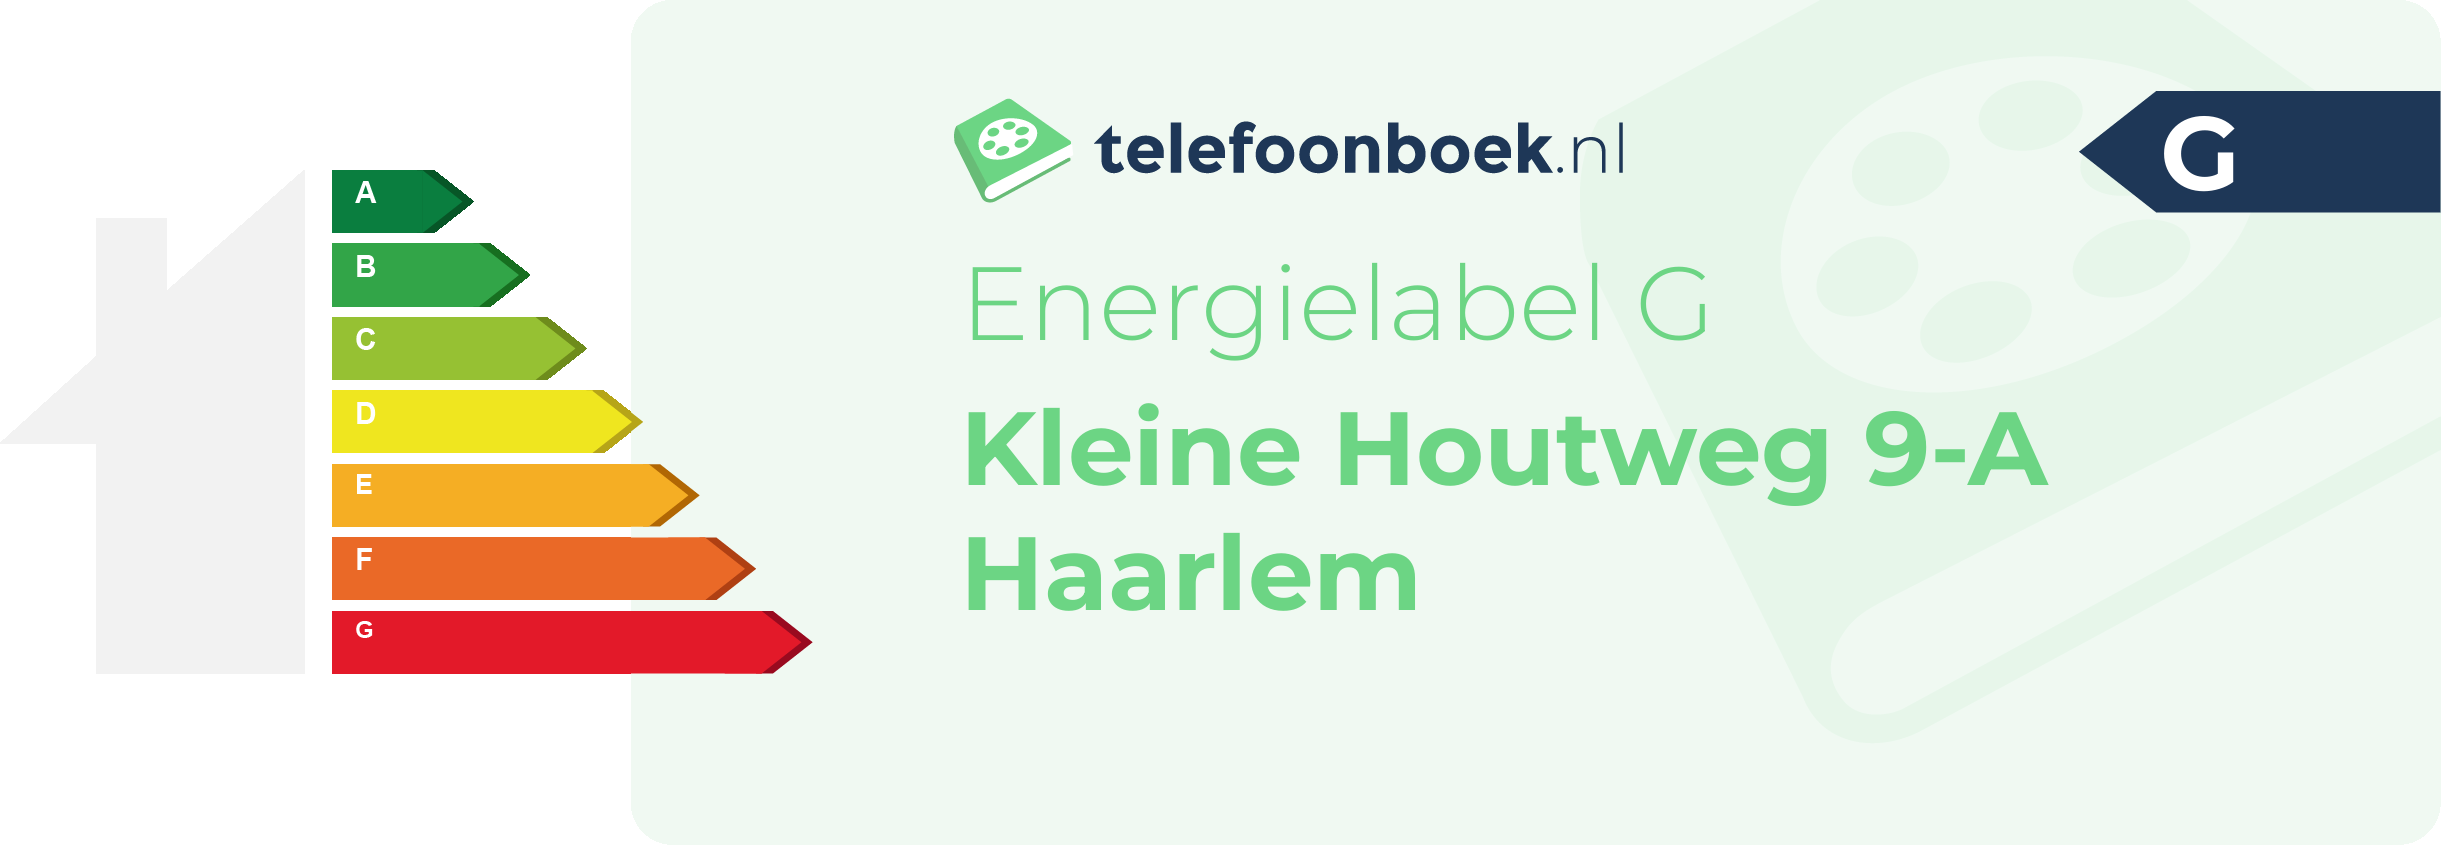 Energielabel Kleine Houtweg 9-A Haarlem